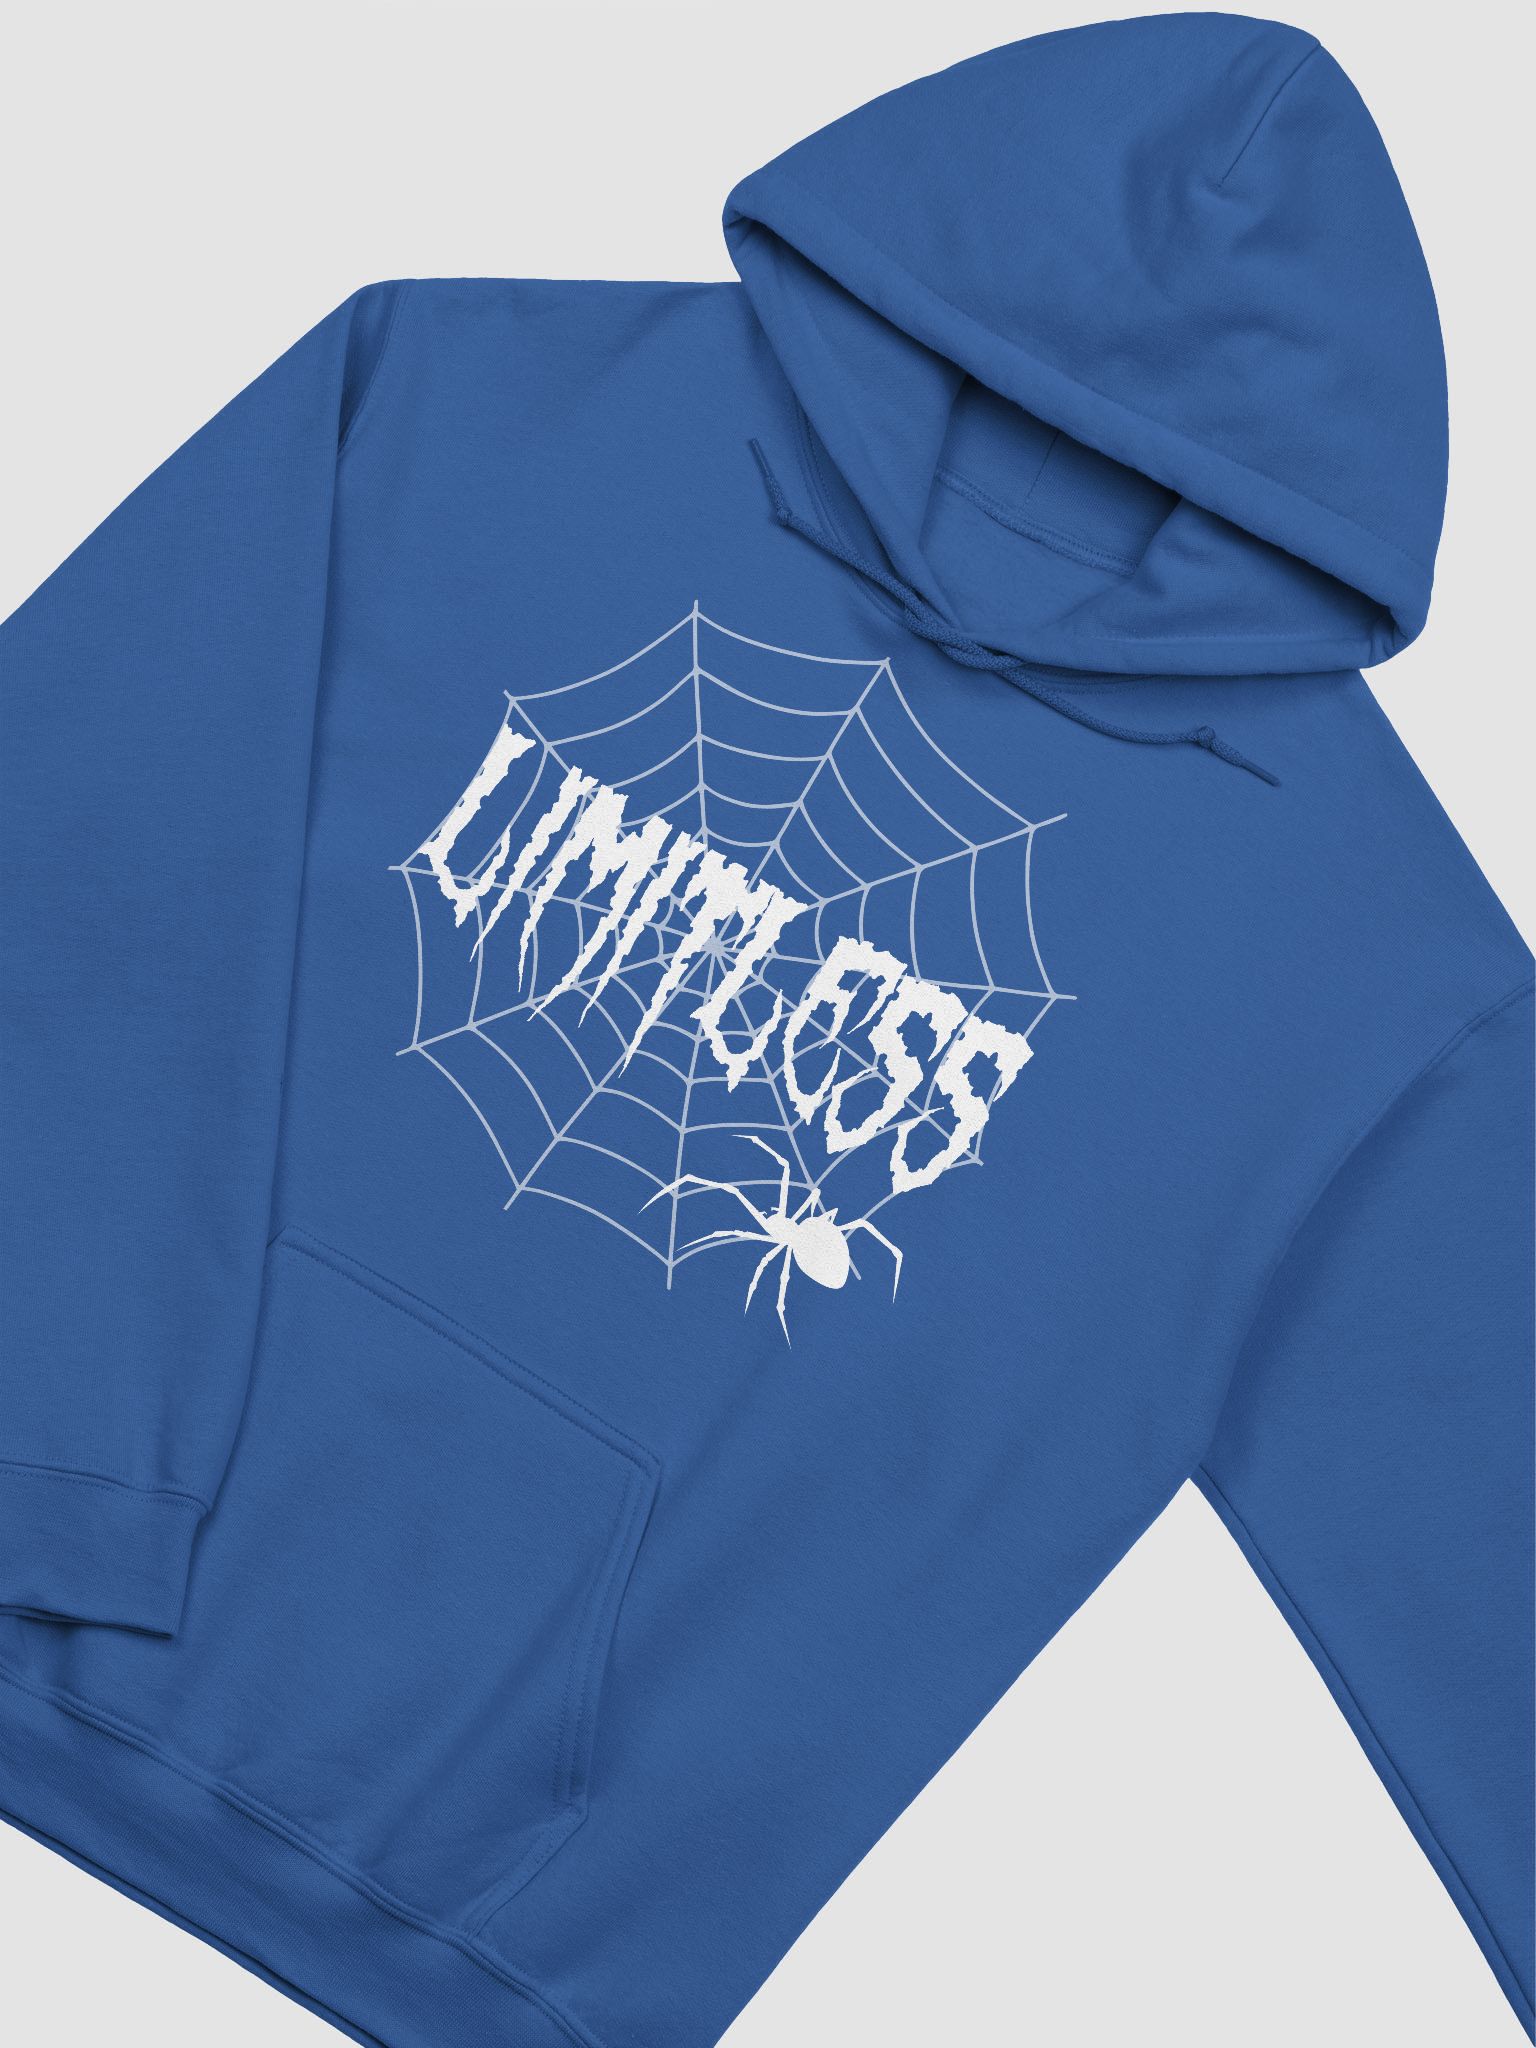 Limitless Sea Fishing Hoodie : Xerosix, Personalised uniform, Workwear,  Dancewear, Teamwear